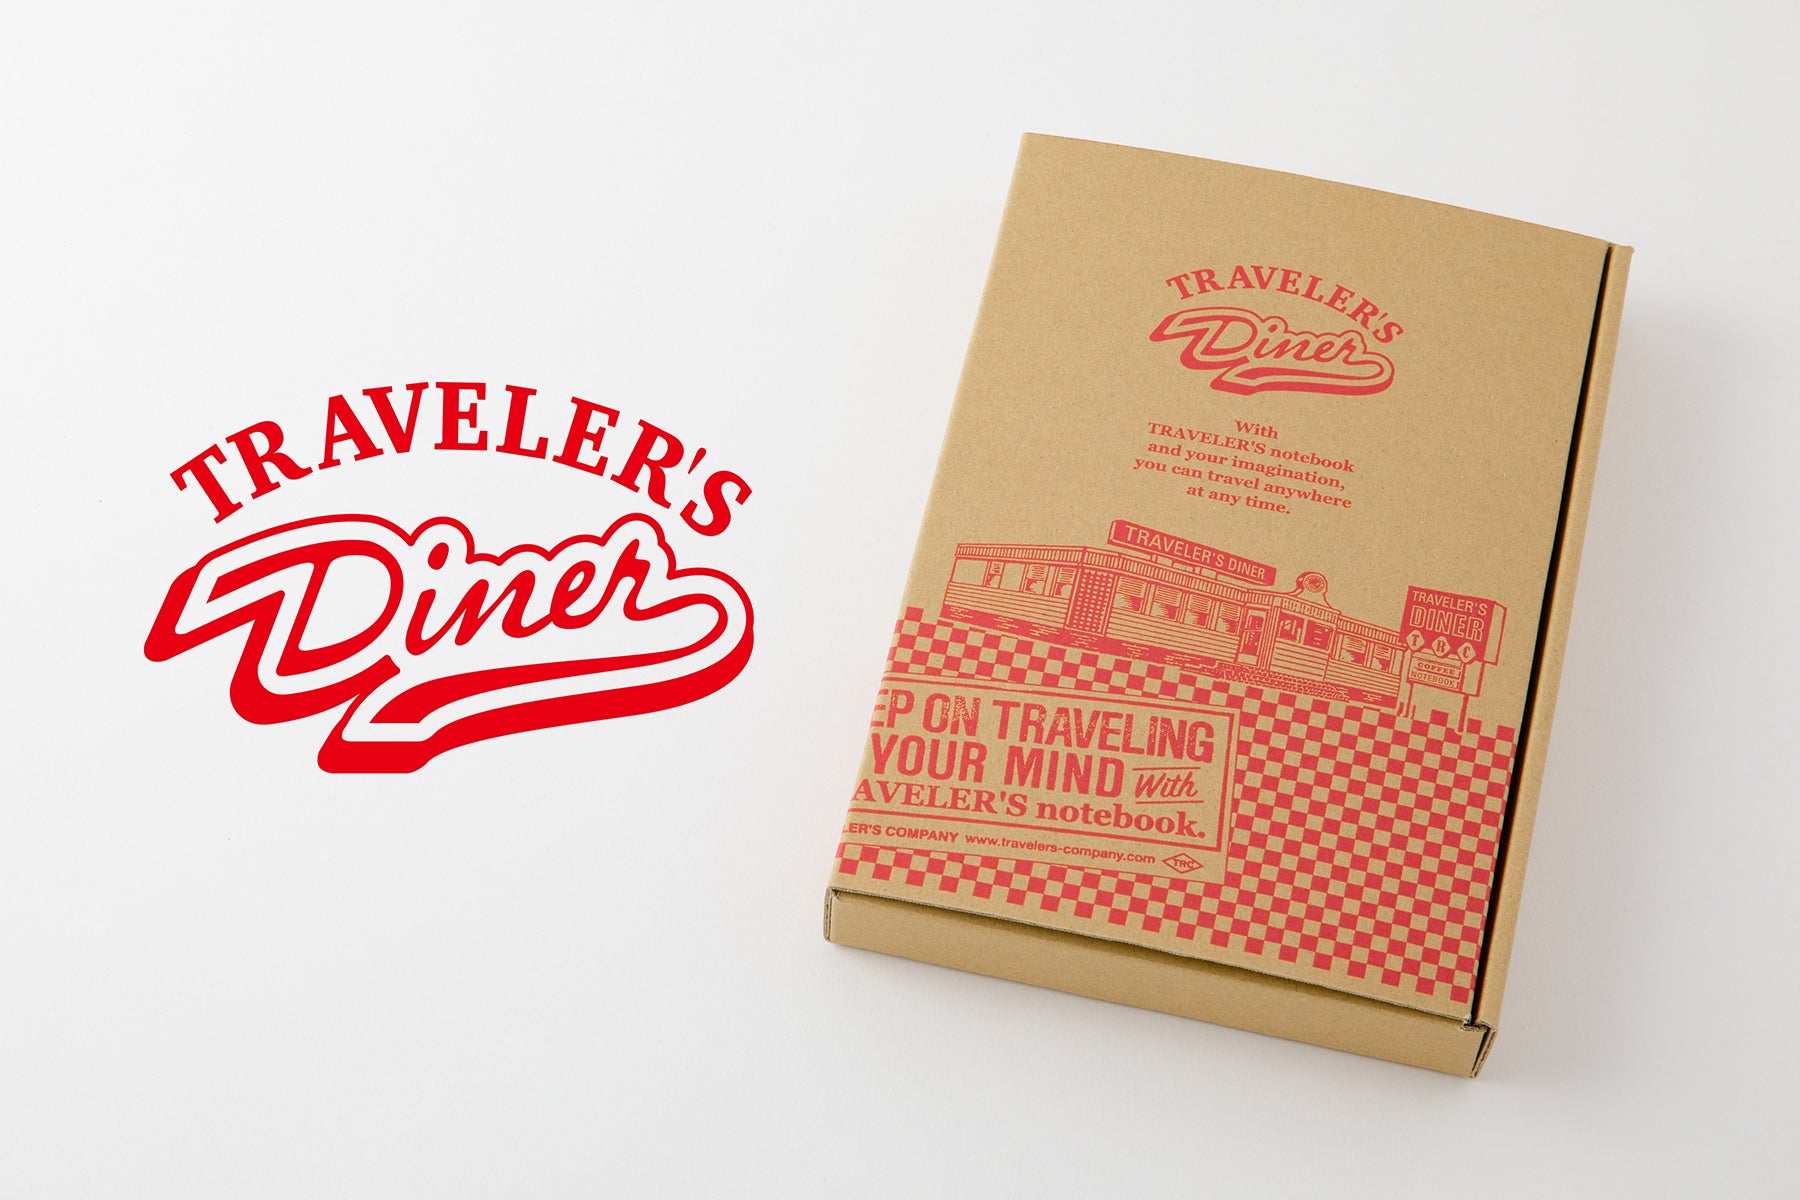 Traveler's Company Notebook Limited Set - Diner | Flywheel | Stationery | Tasmania